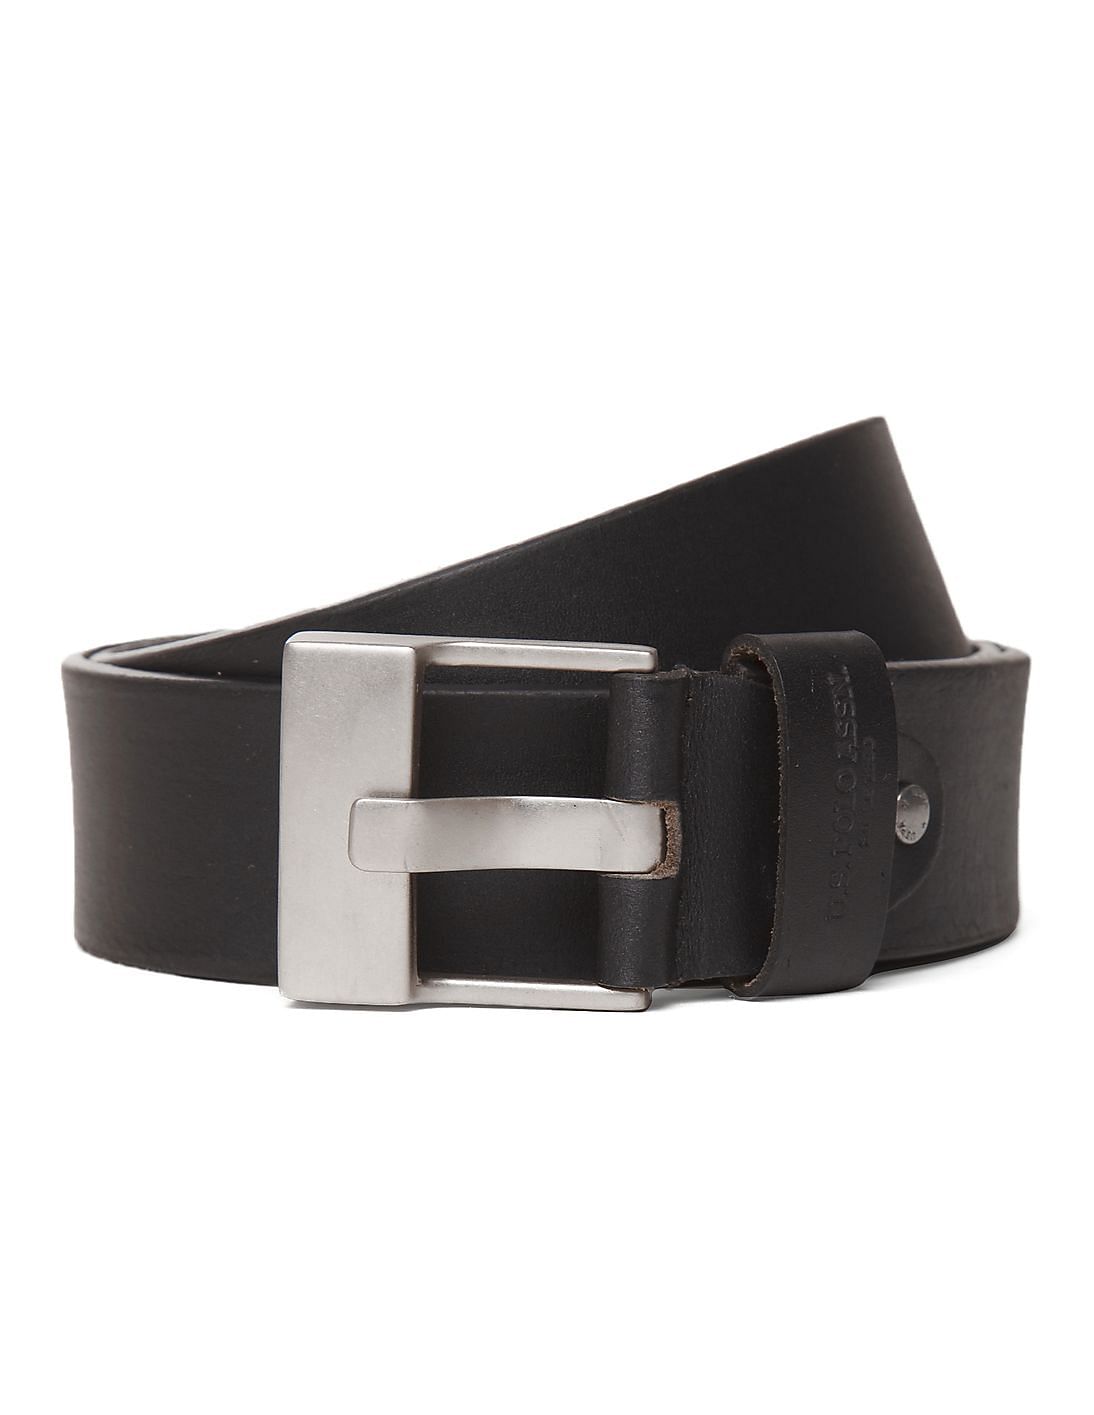 Buy U.S. Polo Assn. Solid Leather Belt - NNNOW.com